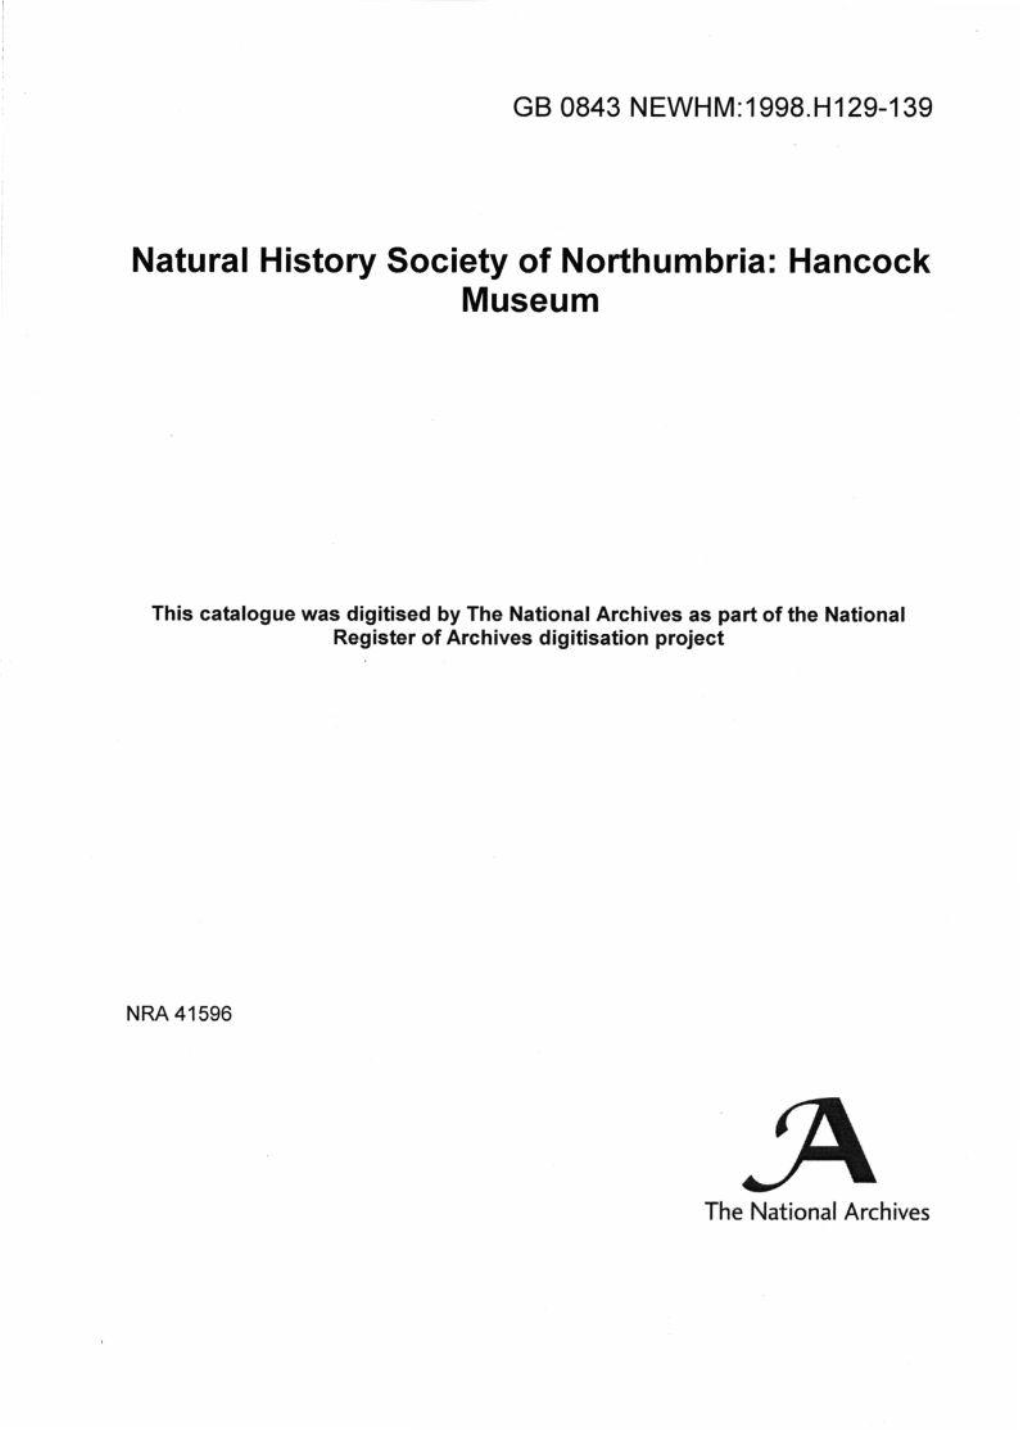 Natural History Society of Northumbria: Hancock Museum